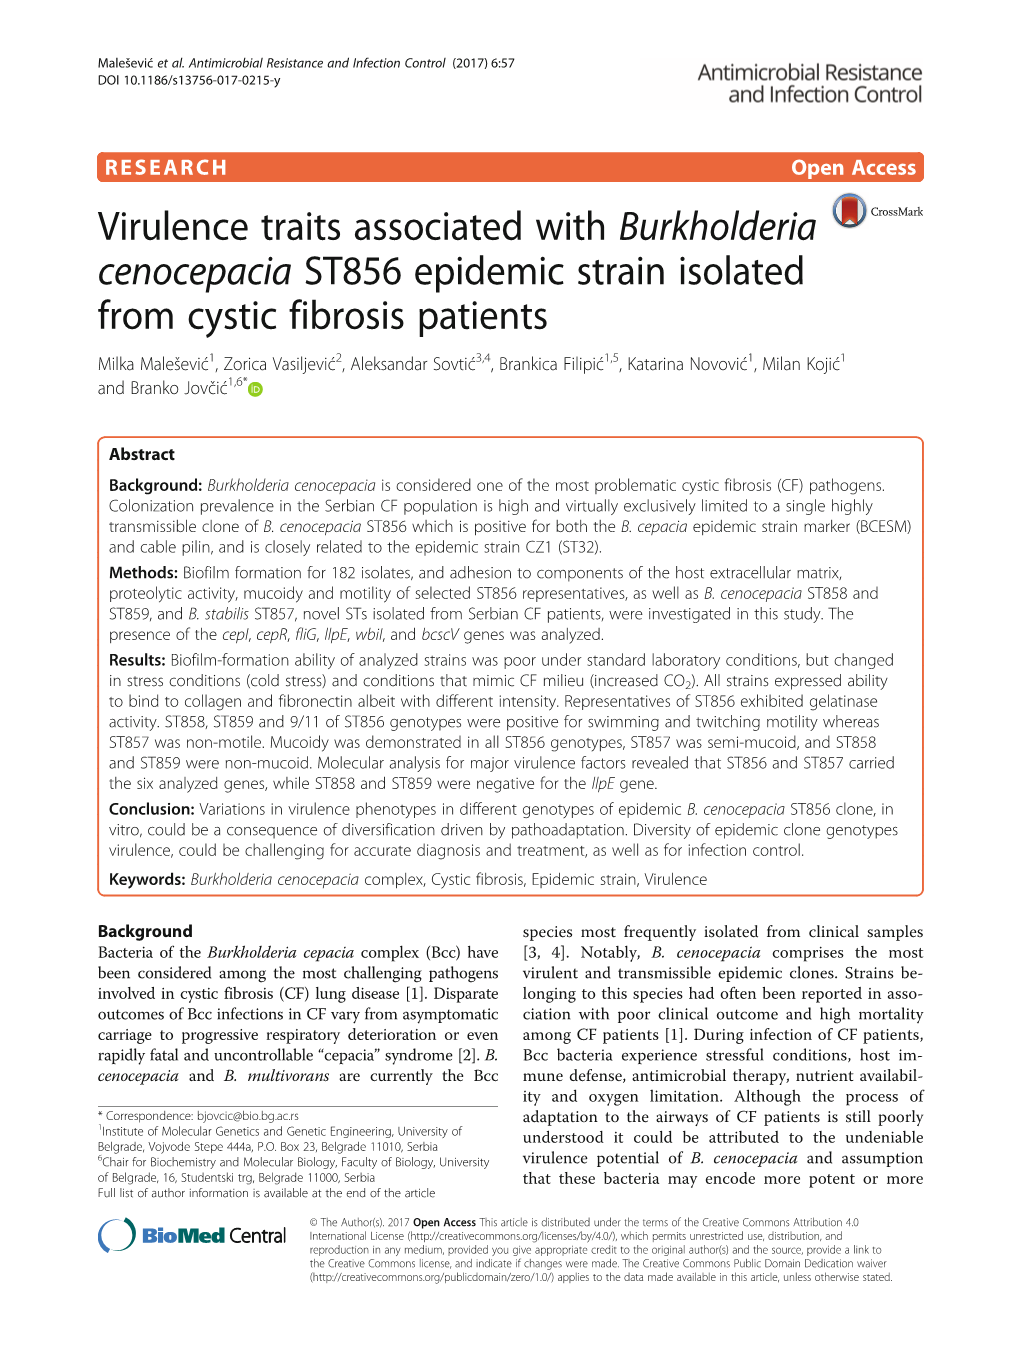 Virulence Traits Associated with Burkholderia Cenocepacia ST856